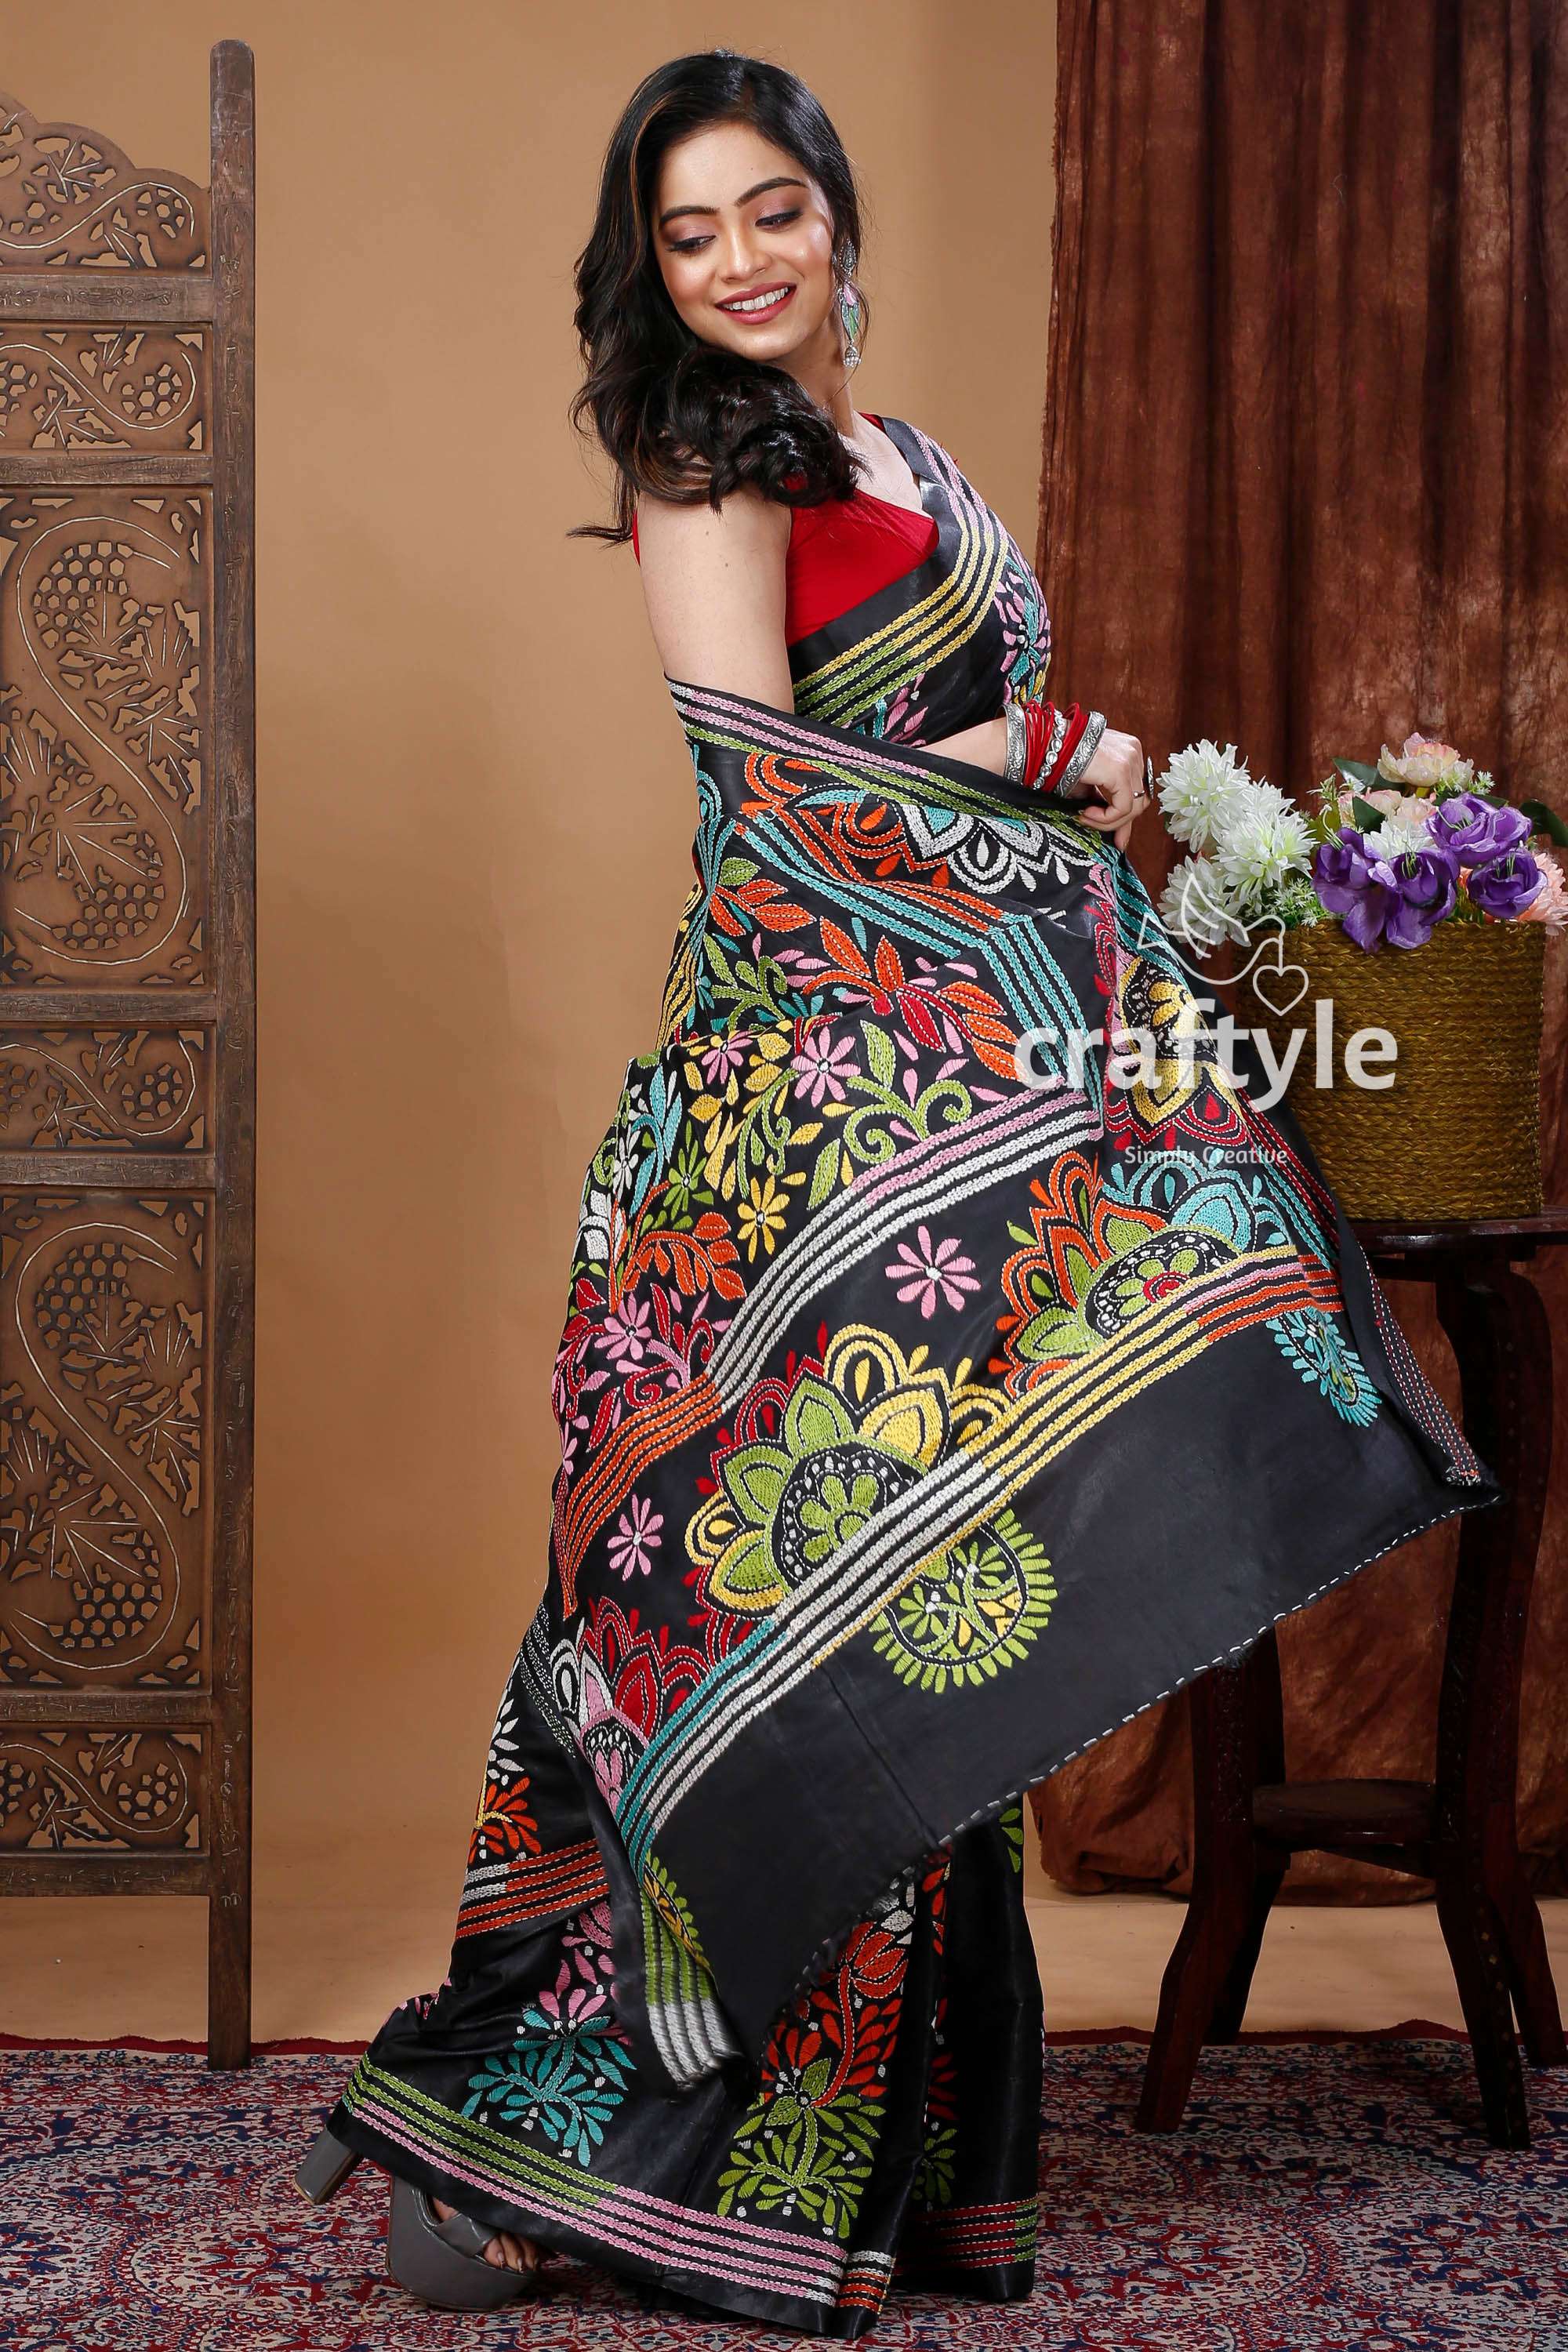 Chrcoal Black Multicolor Thread Handmade Silk Kantha Stitch Saree-Craftyle